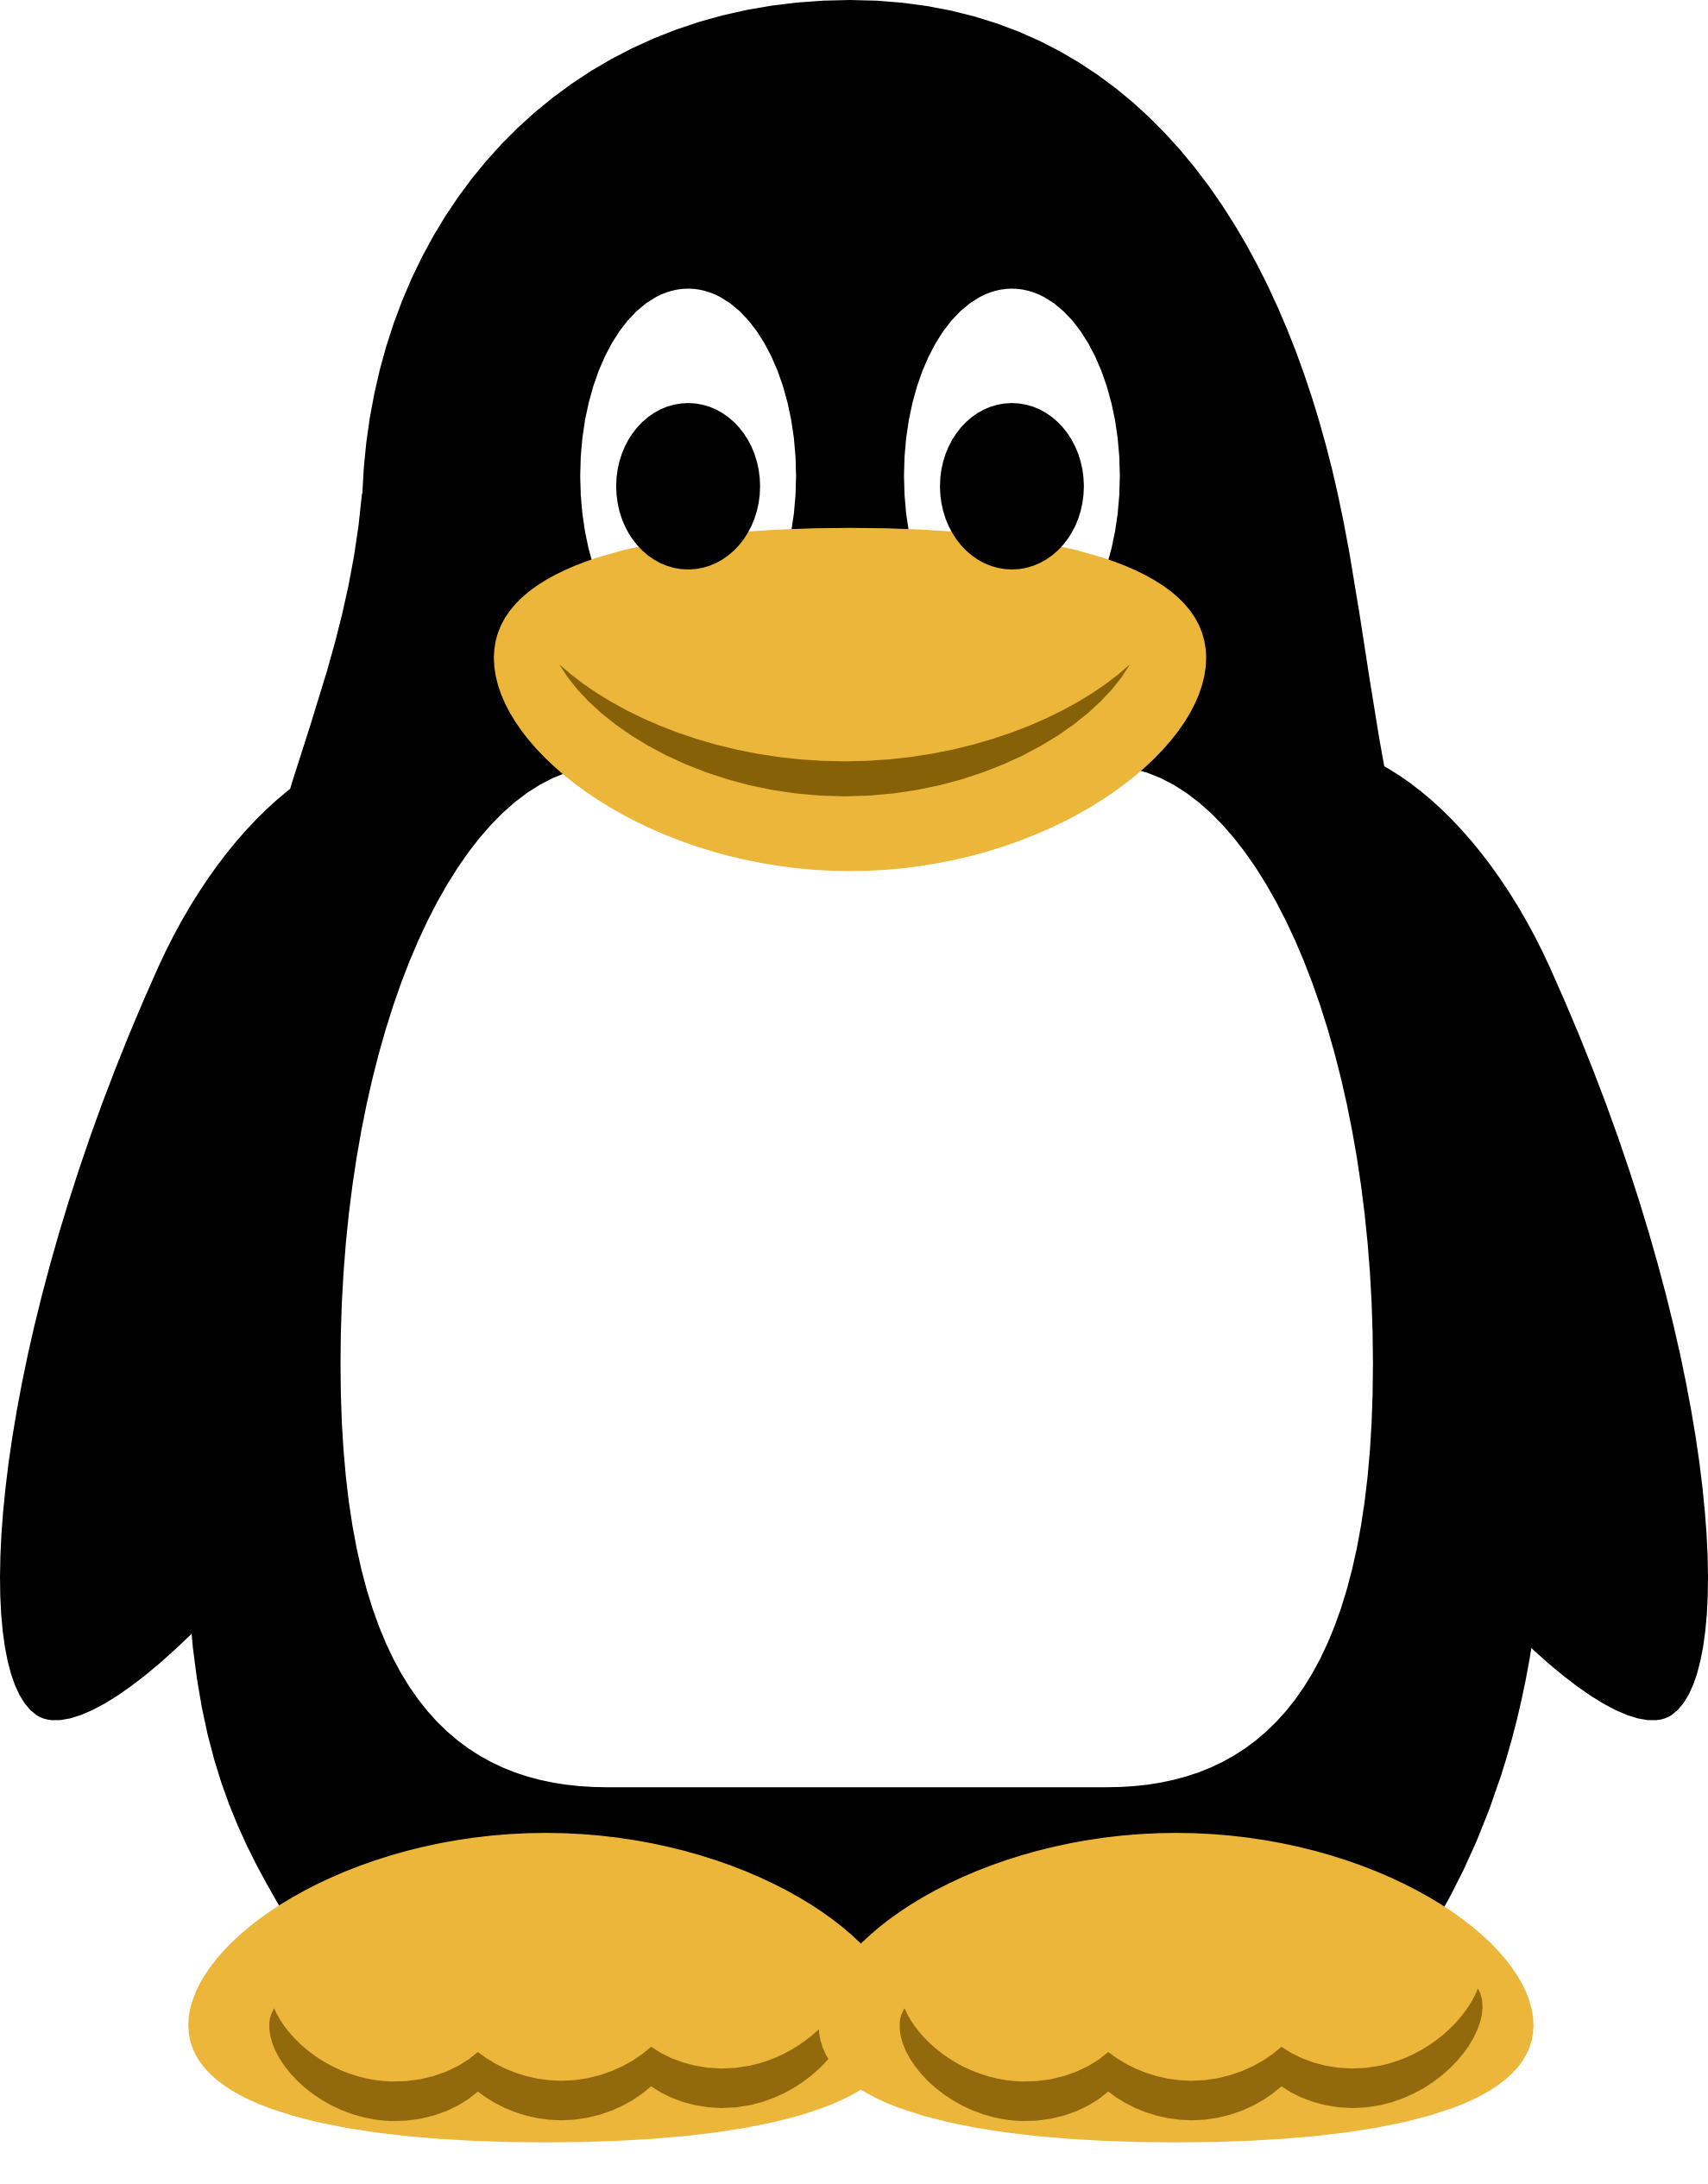 Winter Penguin Clipart Black And White | Clipart Panda - Free ...